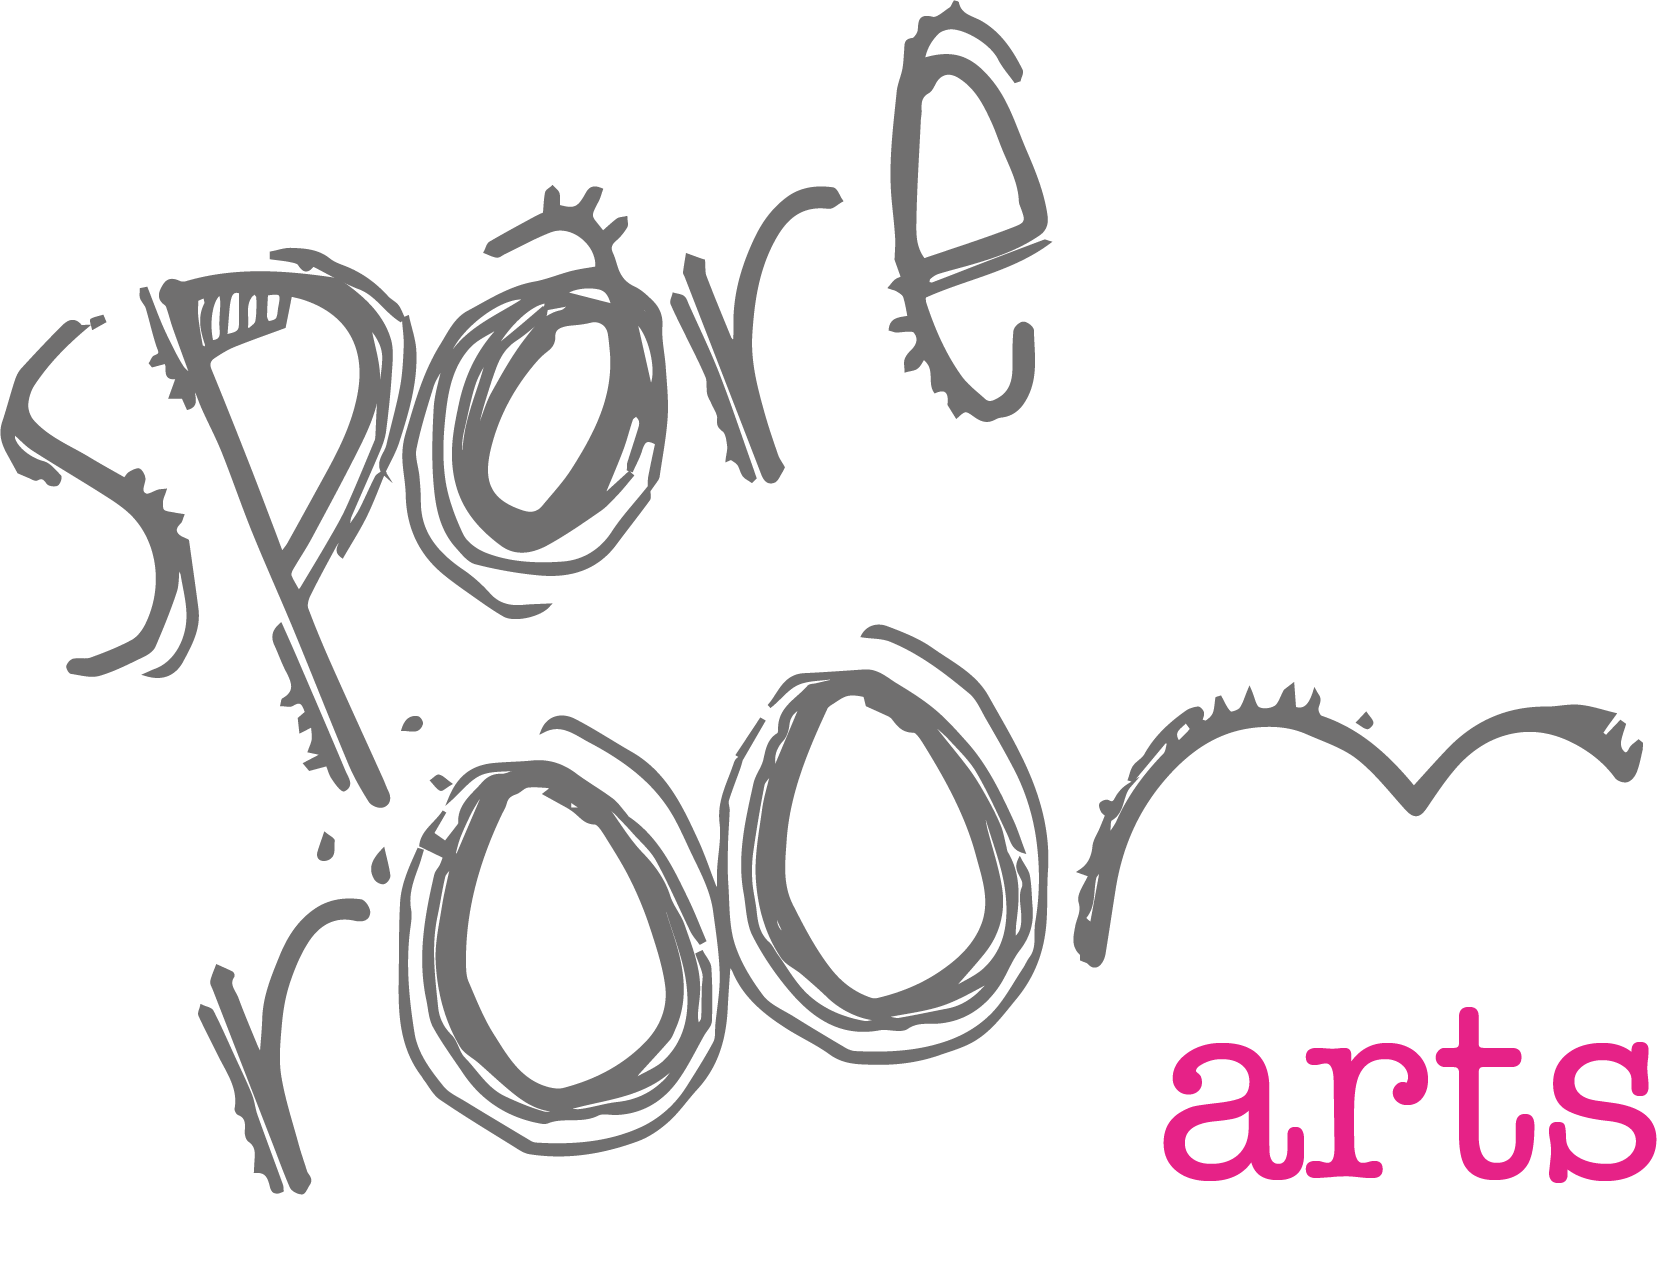 Spare Room Arts